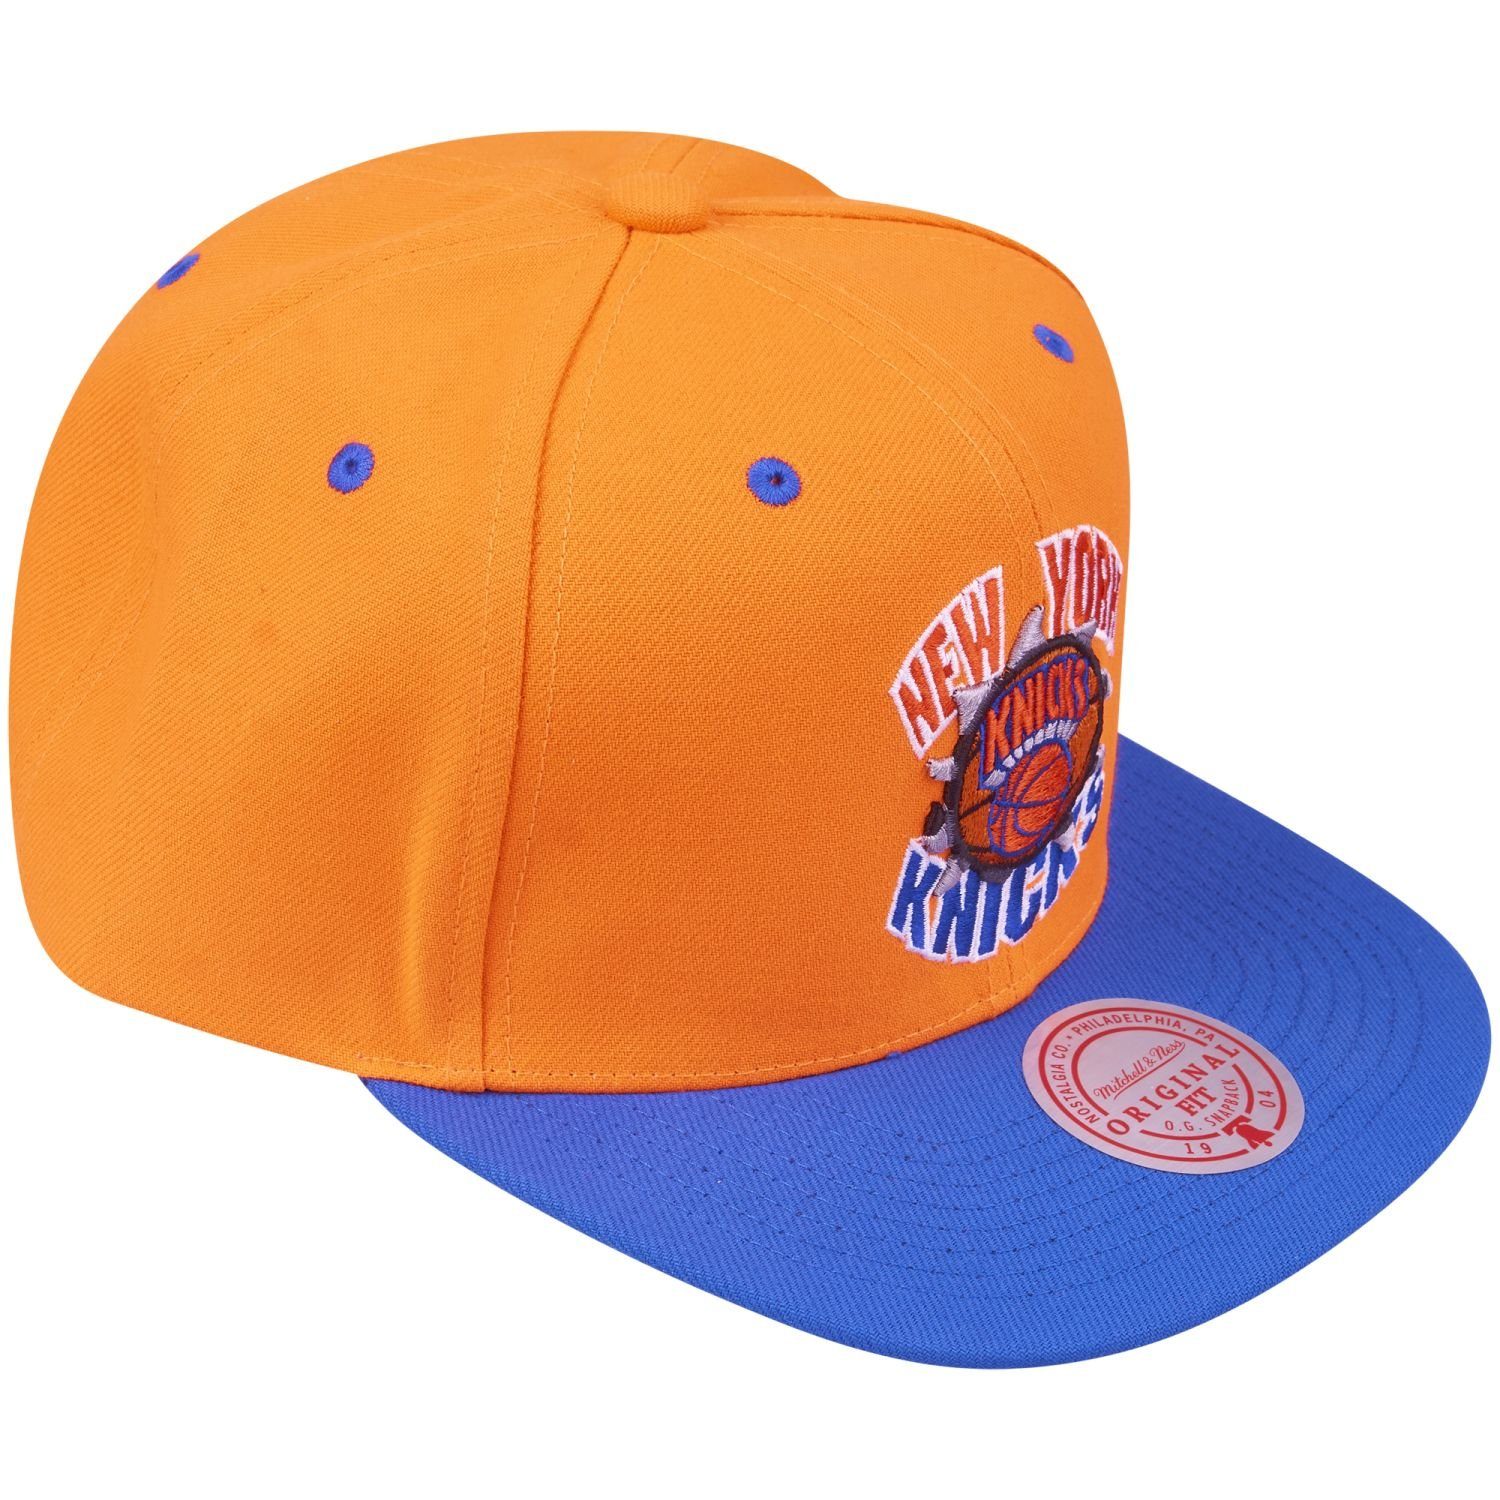 York & BREAKTHROUGH Mitchell Knicks Cap New Snapback Ness